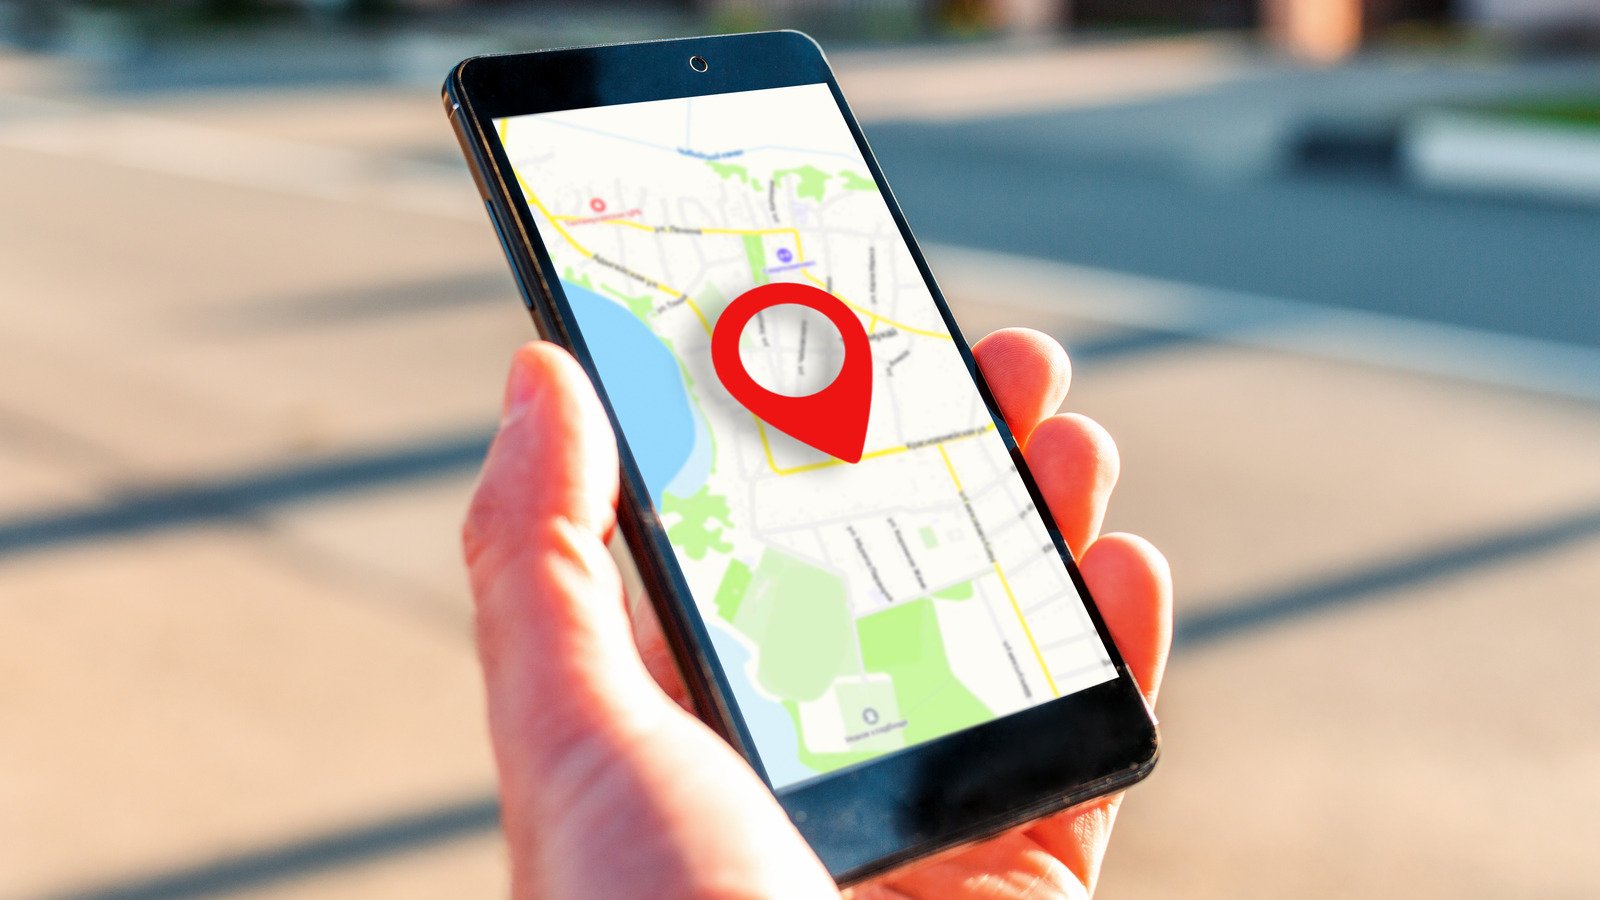 Google Maps Or Apple Maps? SlashGear Survey Reveals Which GPS App People Prefer To Use